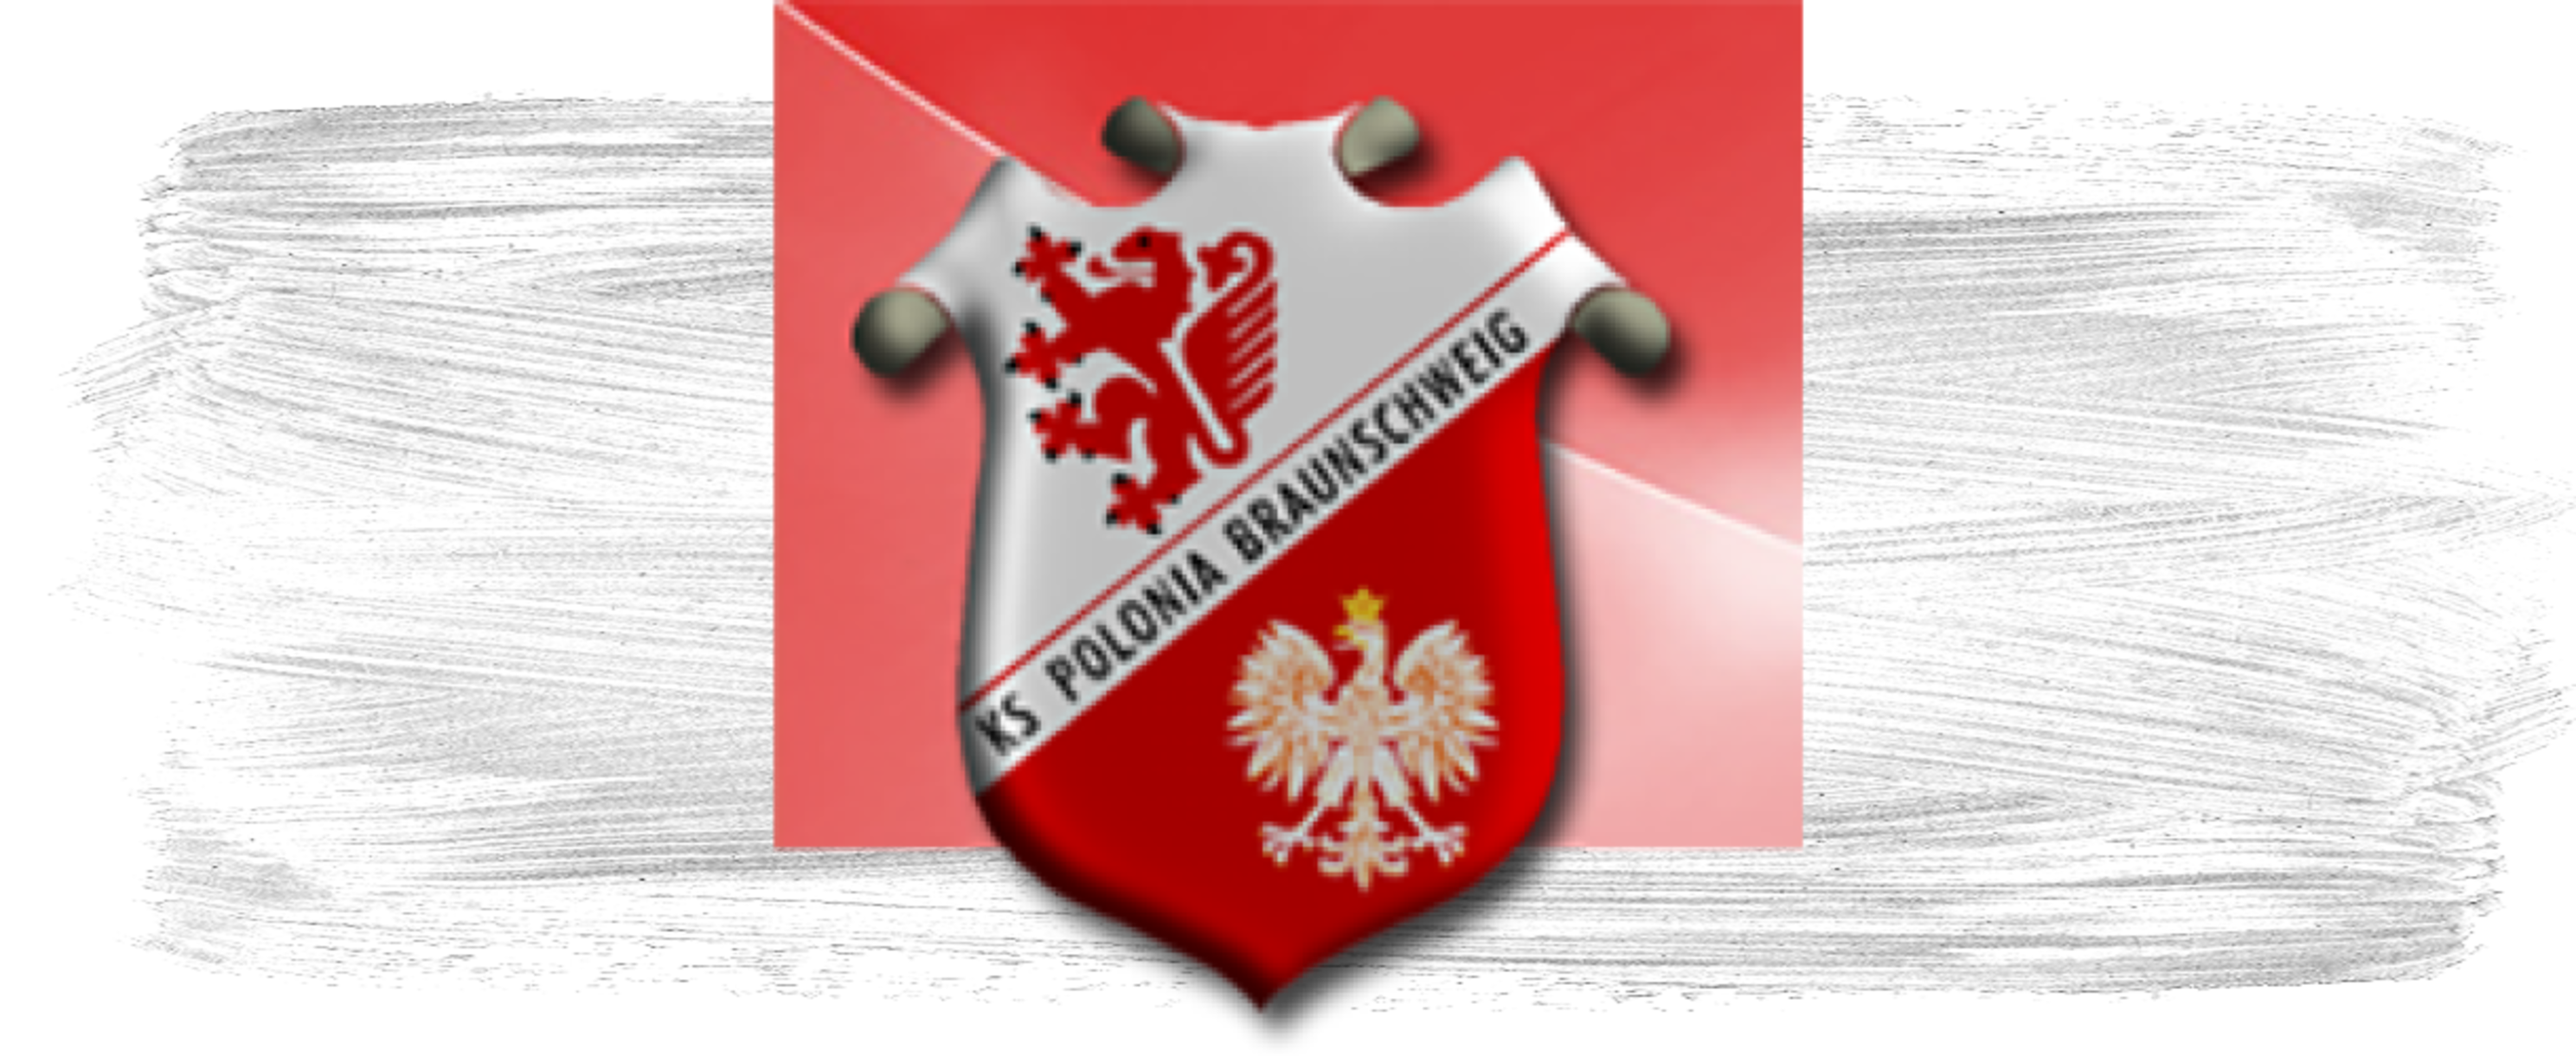 KS Polonia Braunschweig